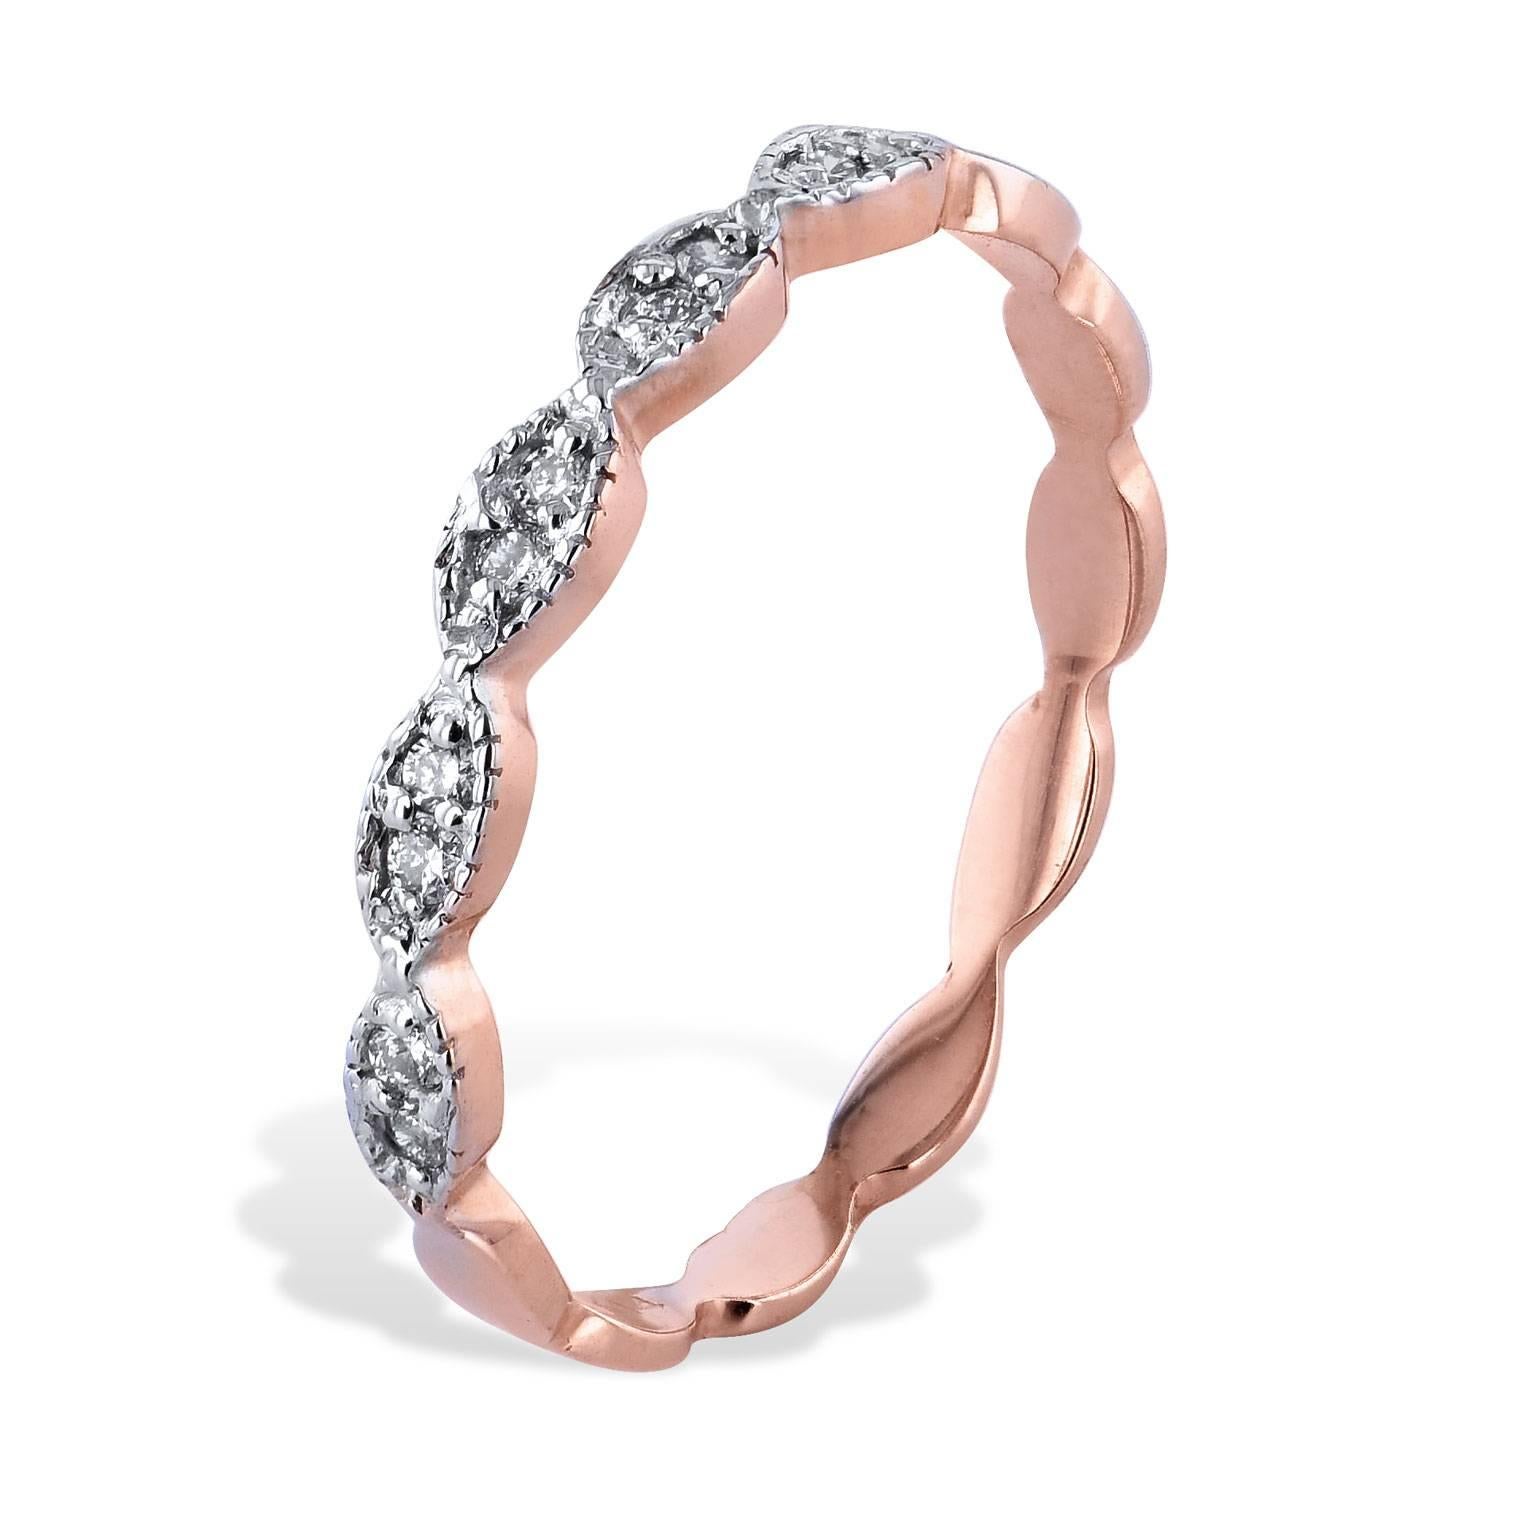 Interlocking ovals featuring 0.08 carat of diamond evoke a sense of movement in this 14 karat rose gold diamond band (size 6.5).